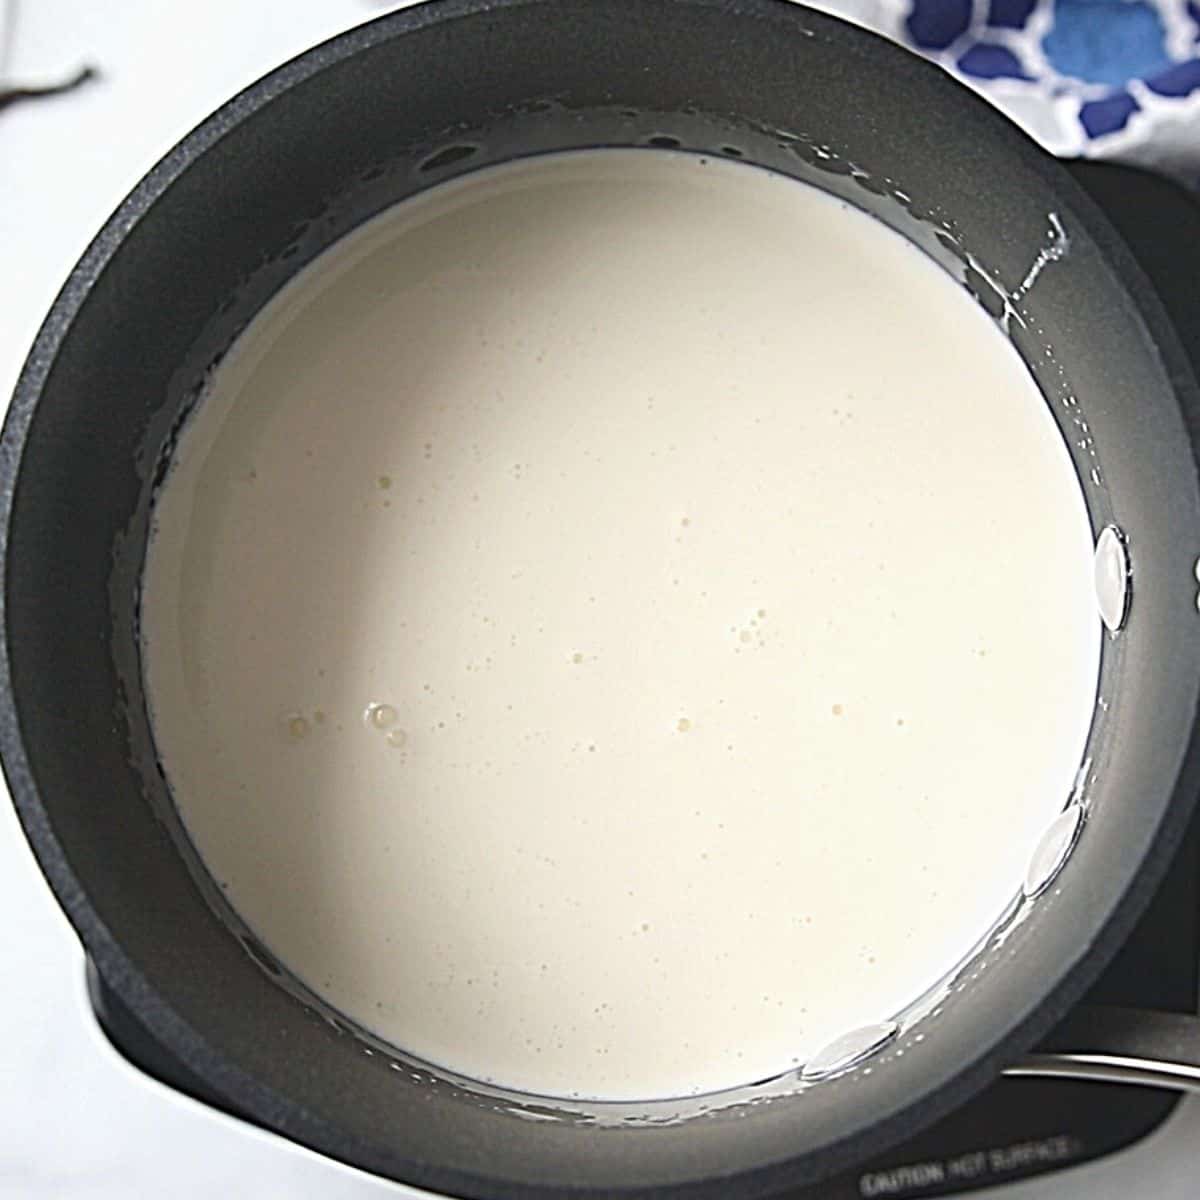 Cream in saucepan for homemade ice cream. 